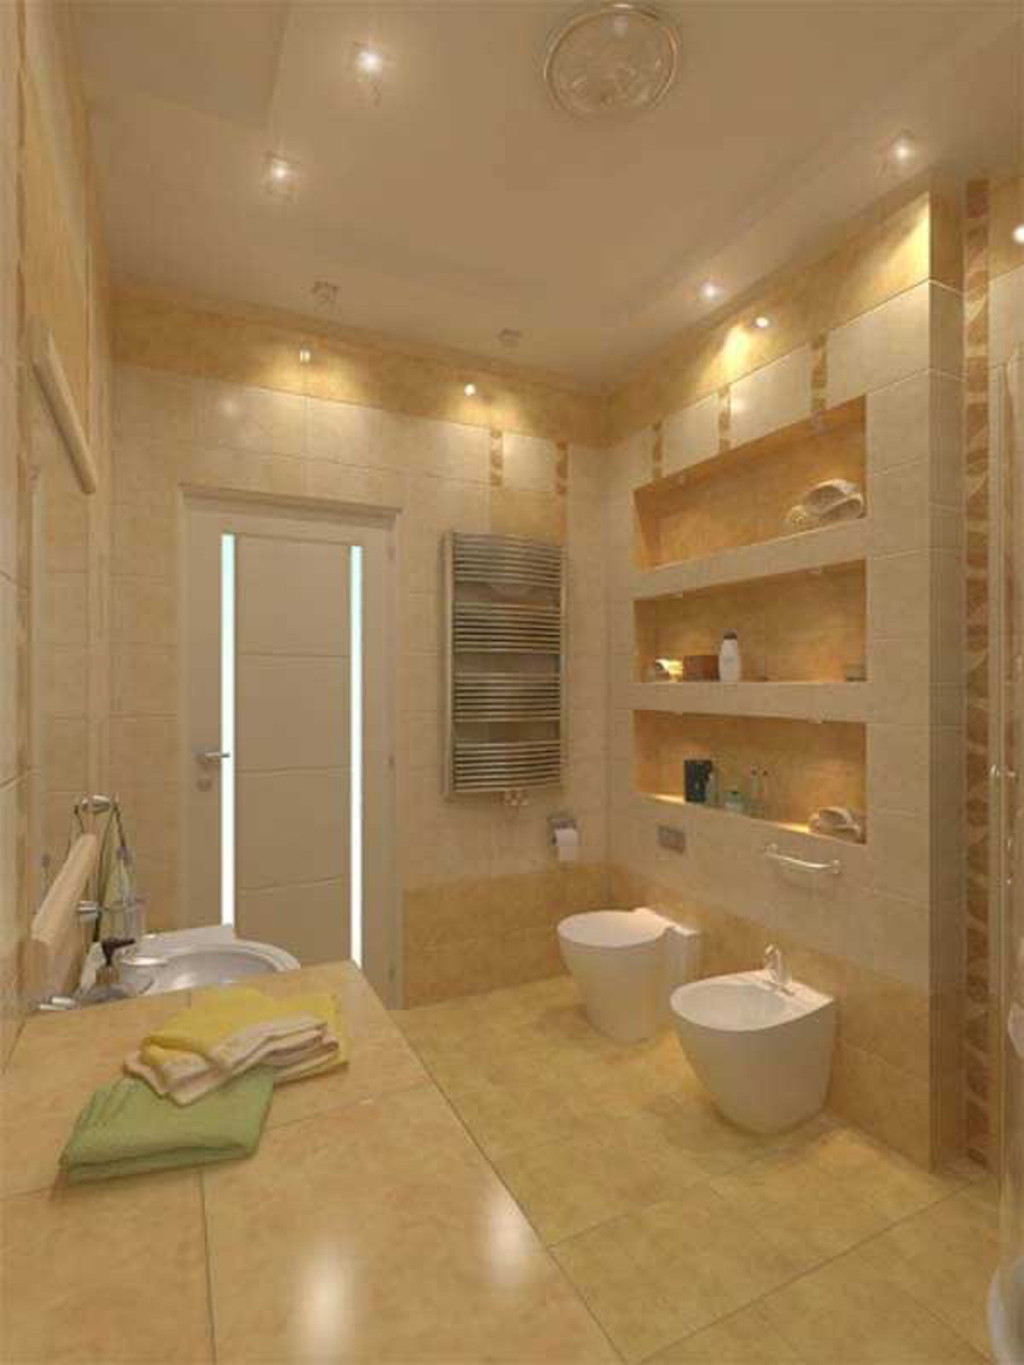 Most Popular Bathroom Tile
 30 wonderful ideas and photos of most popular bathroom